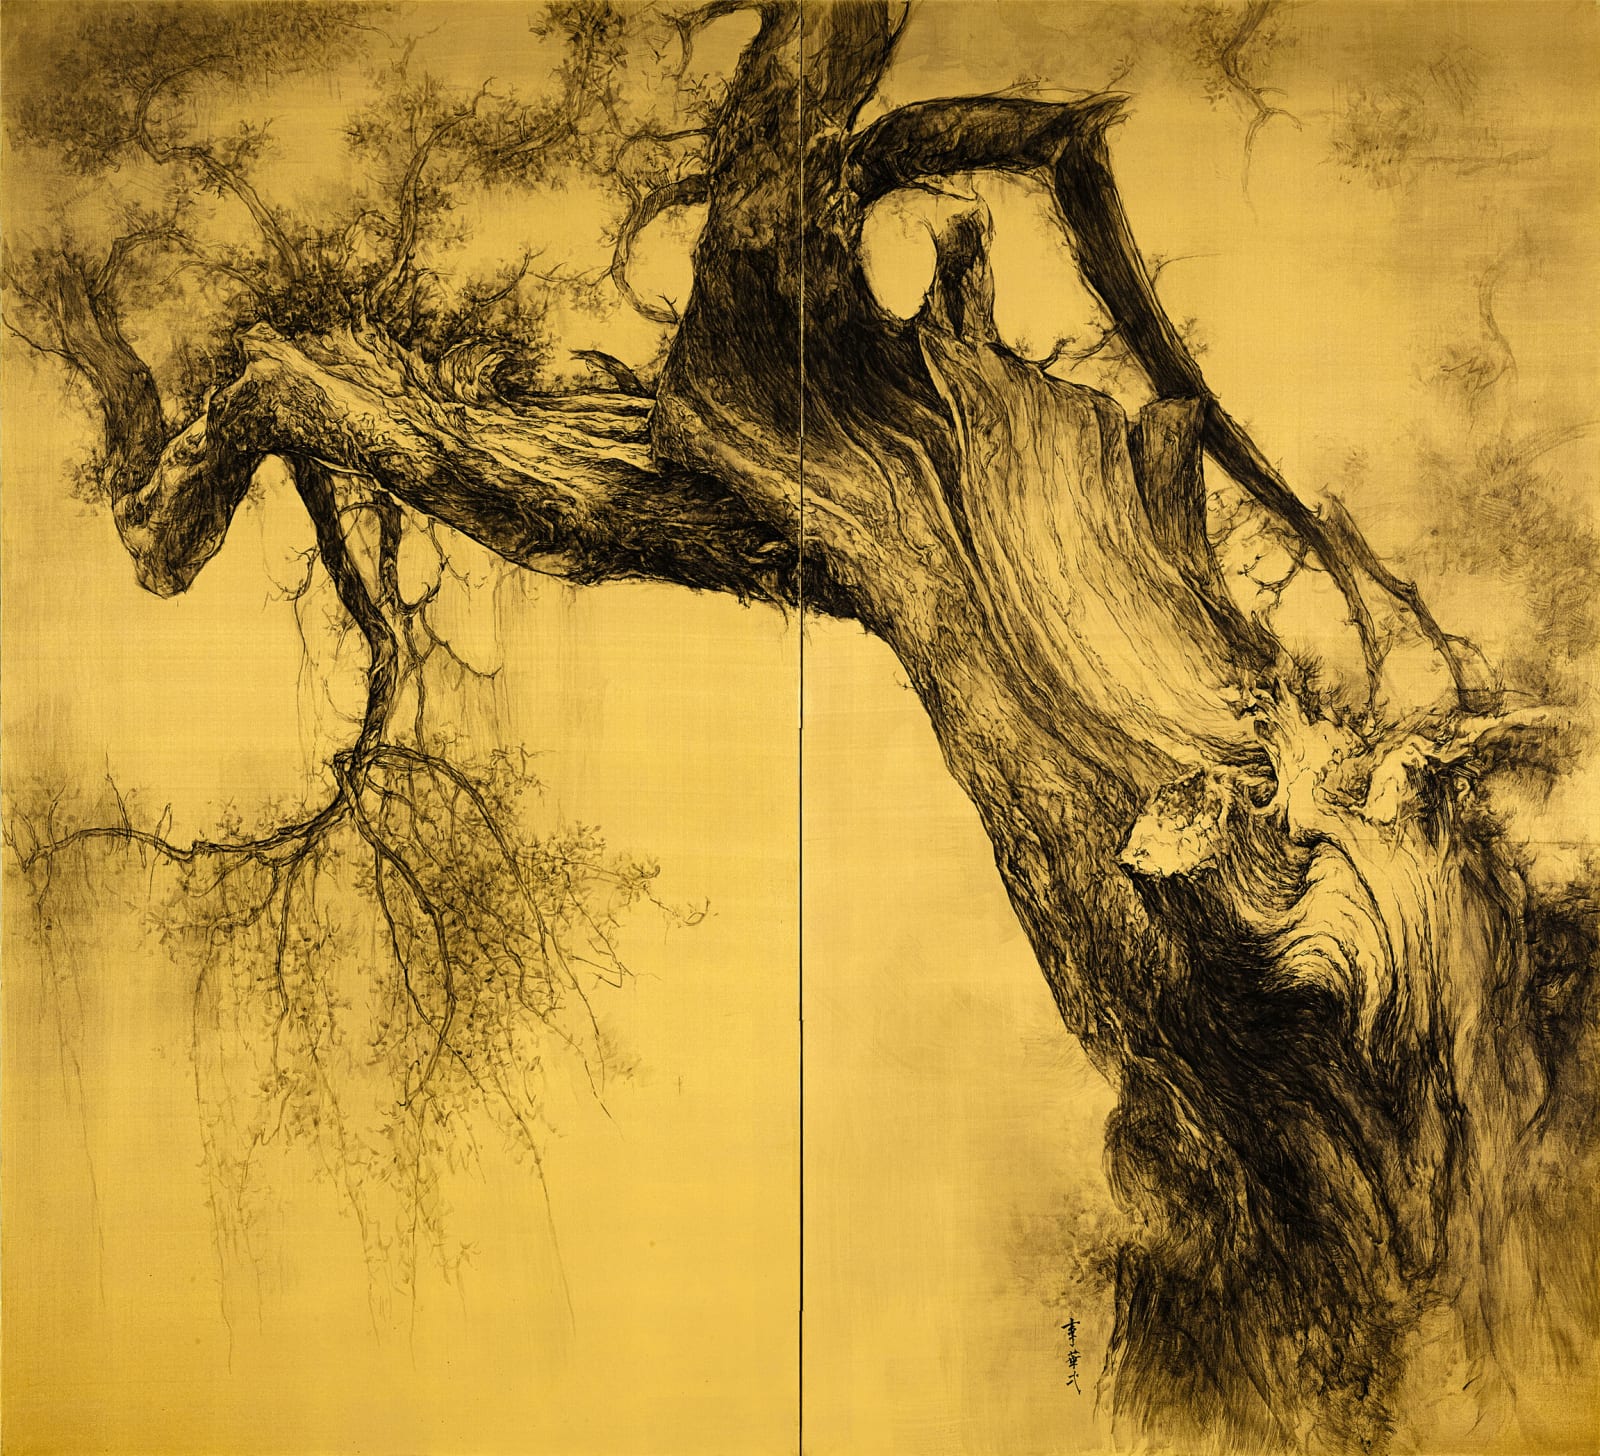 Li Huayi 李華弌, In the Spirit of the Big Dipper 《北斗之虛》, 2014